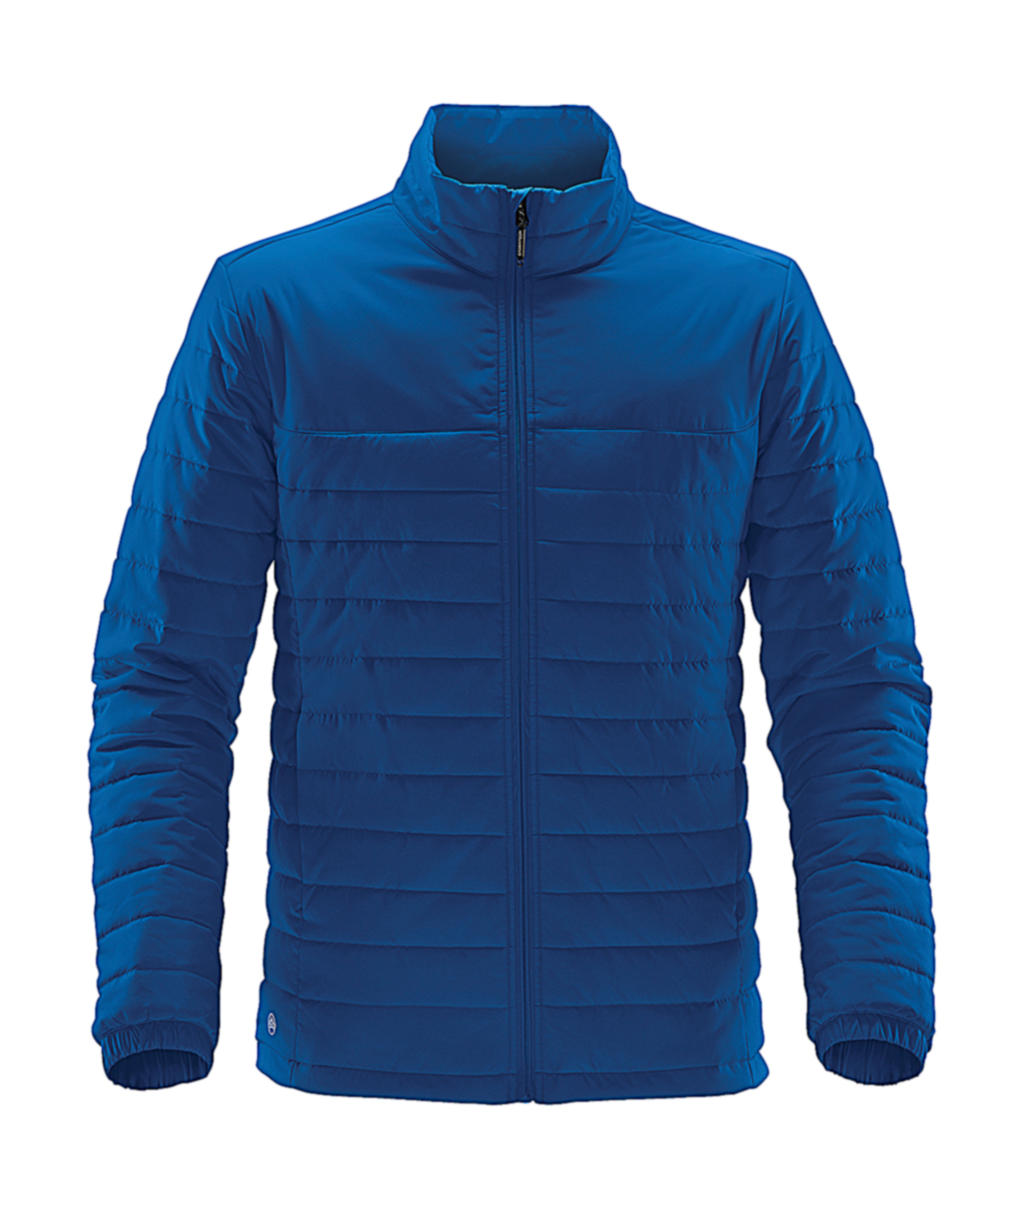  Nautilus Thermal Jacket in Farbe Azure